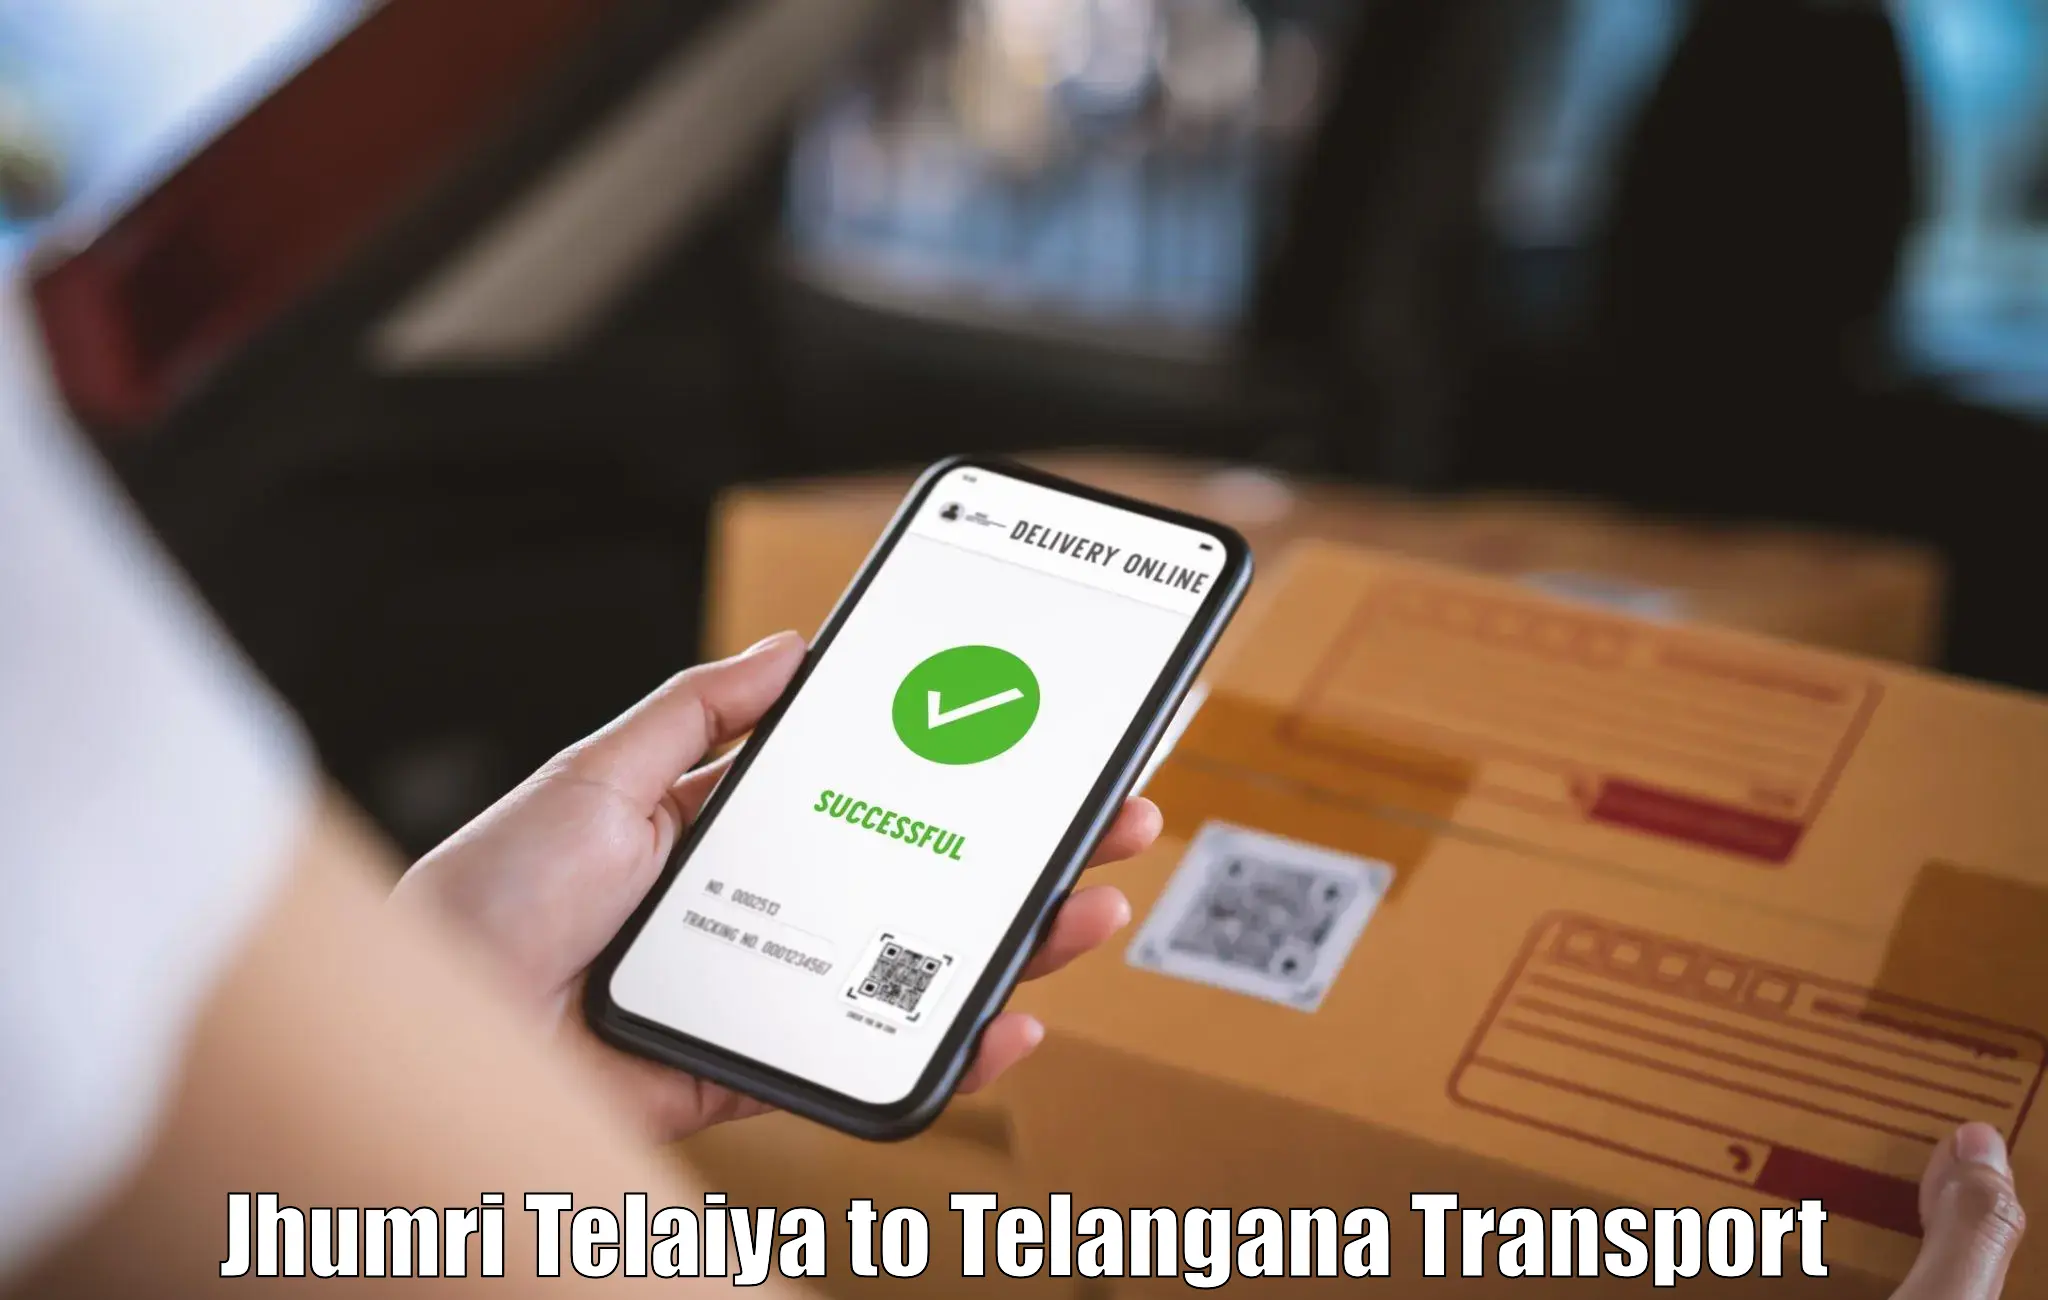 Transportation services Jhumri Telaiya to Eligedu